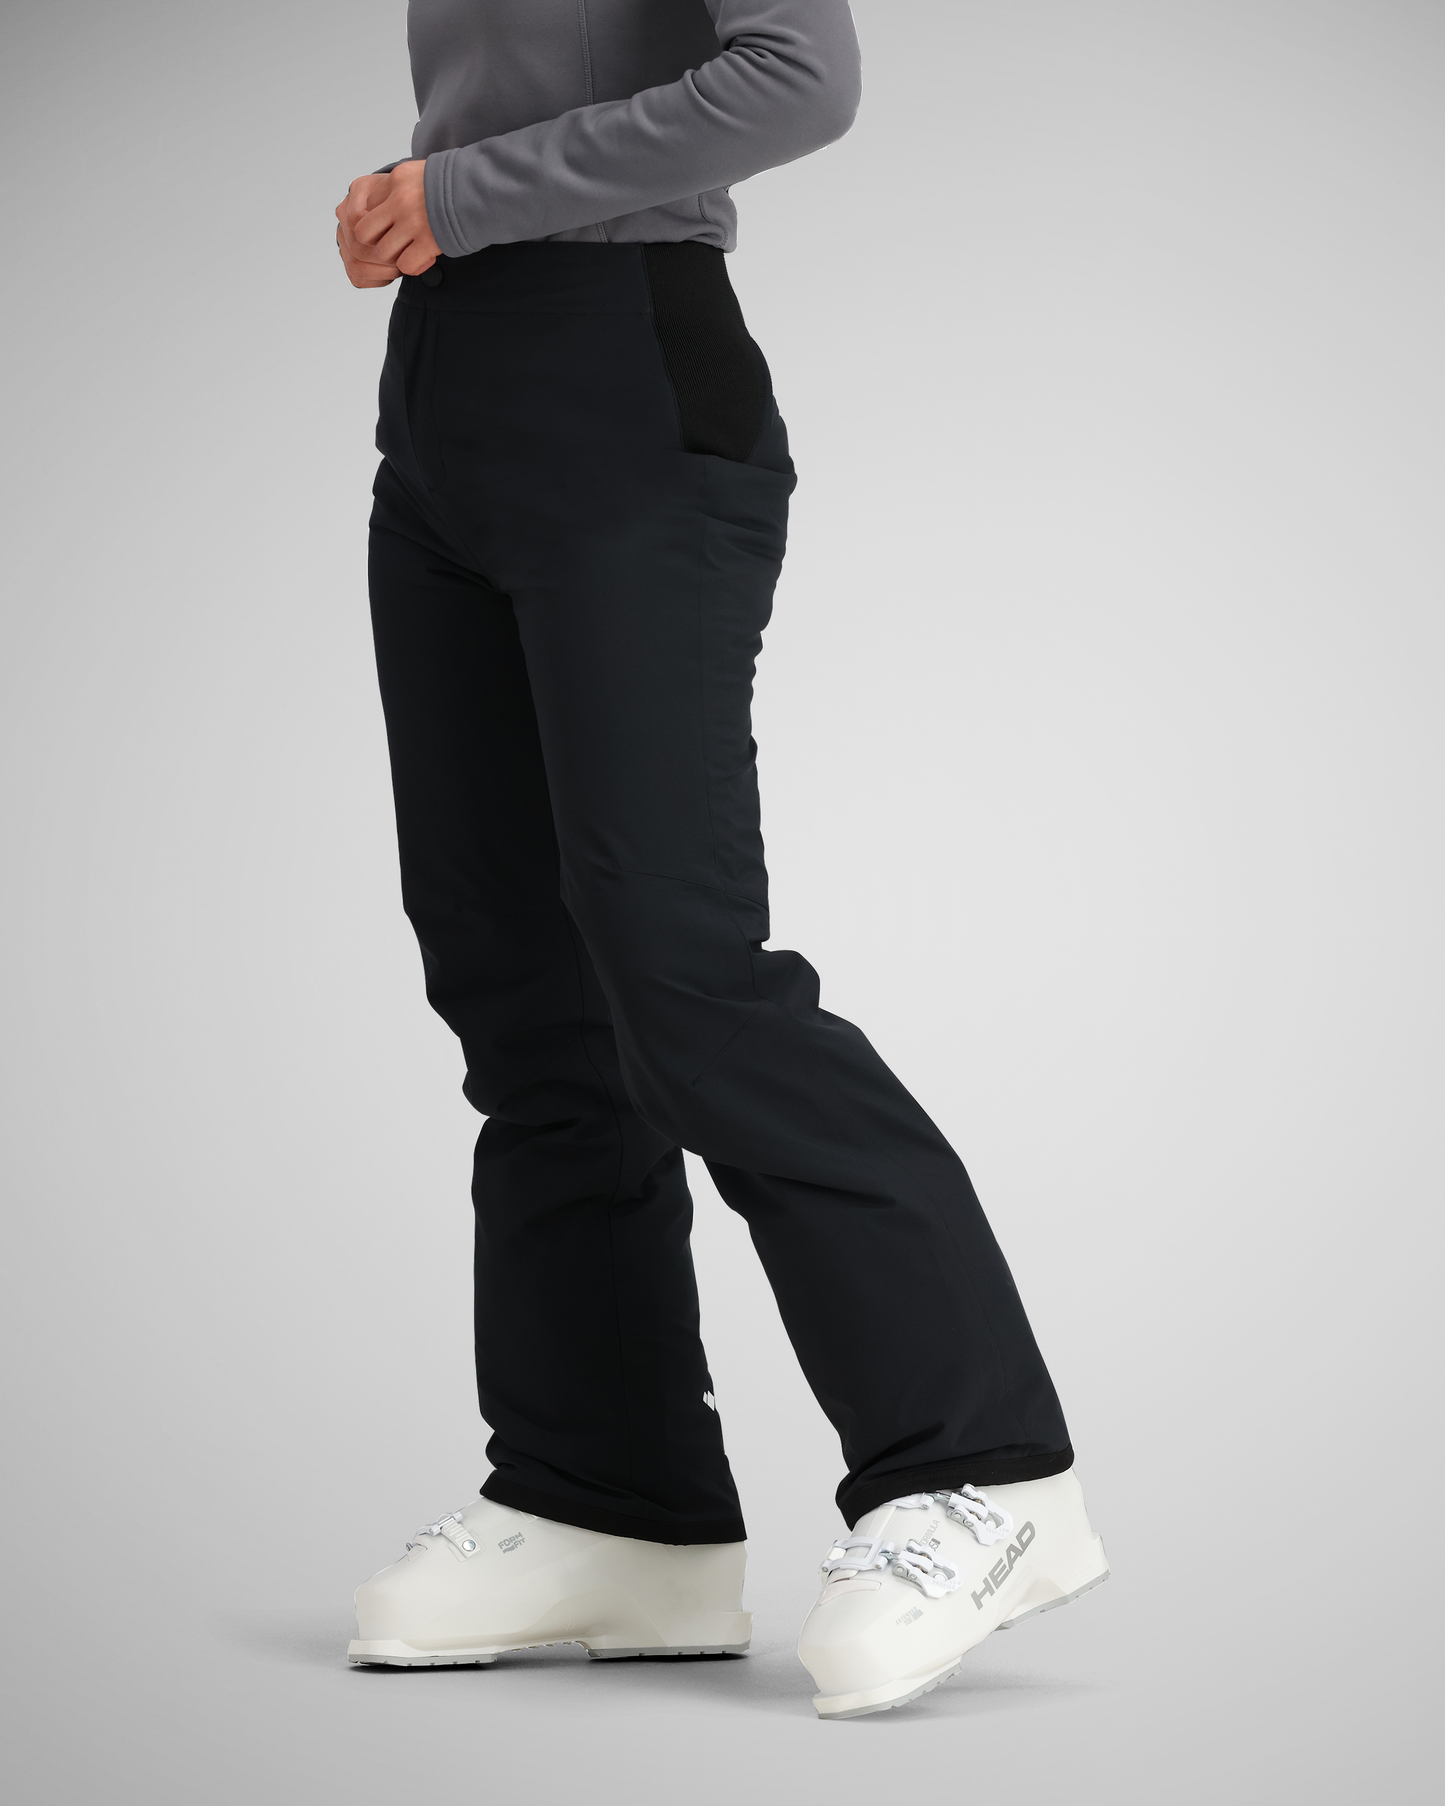 HYPRAR High Waist Front Lined Ski Pants, Functional Pants